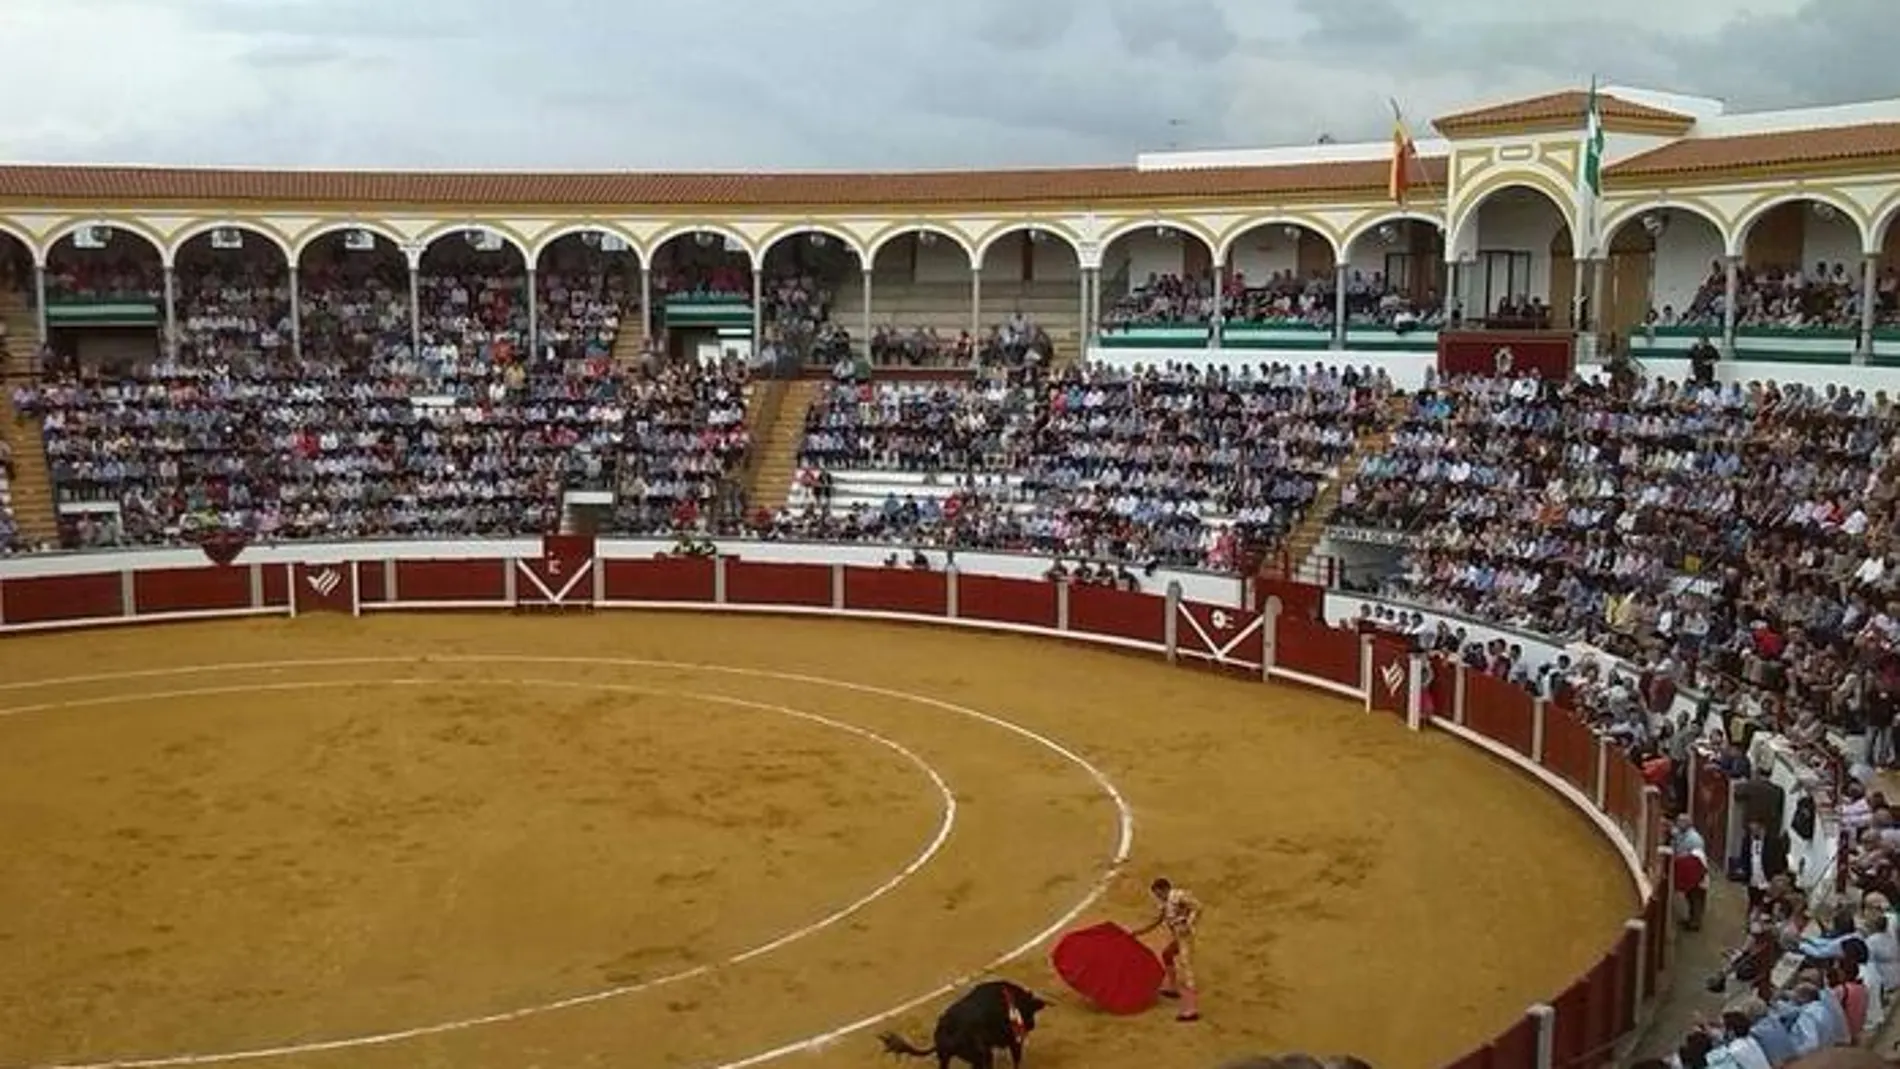 Plaza de toros de Pozoblanco